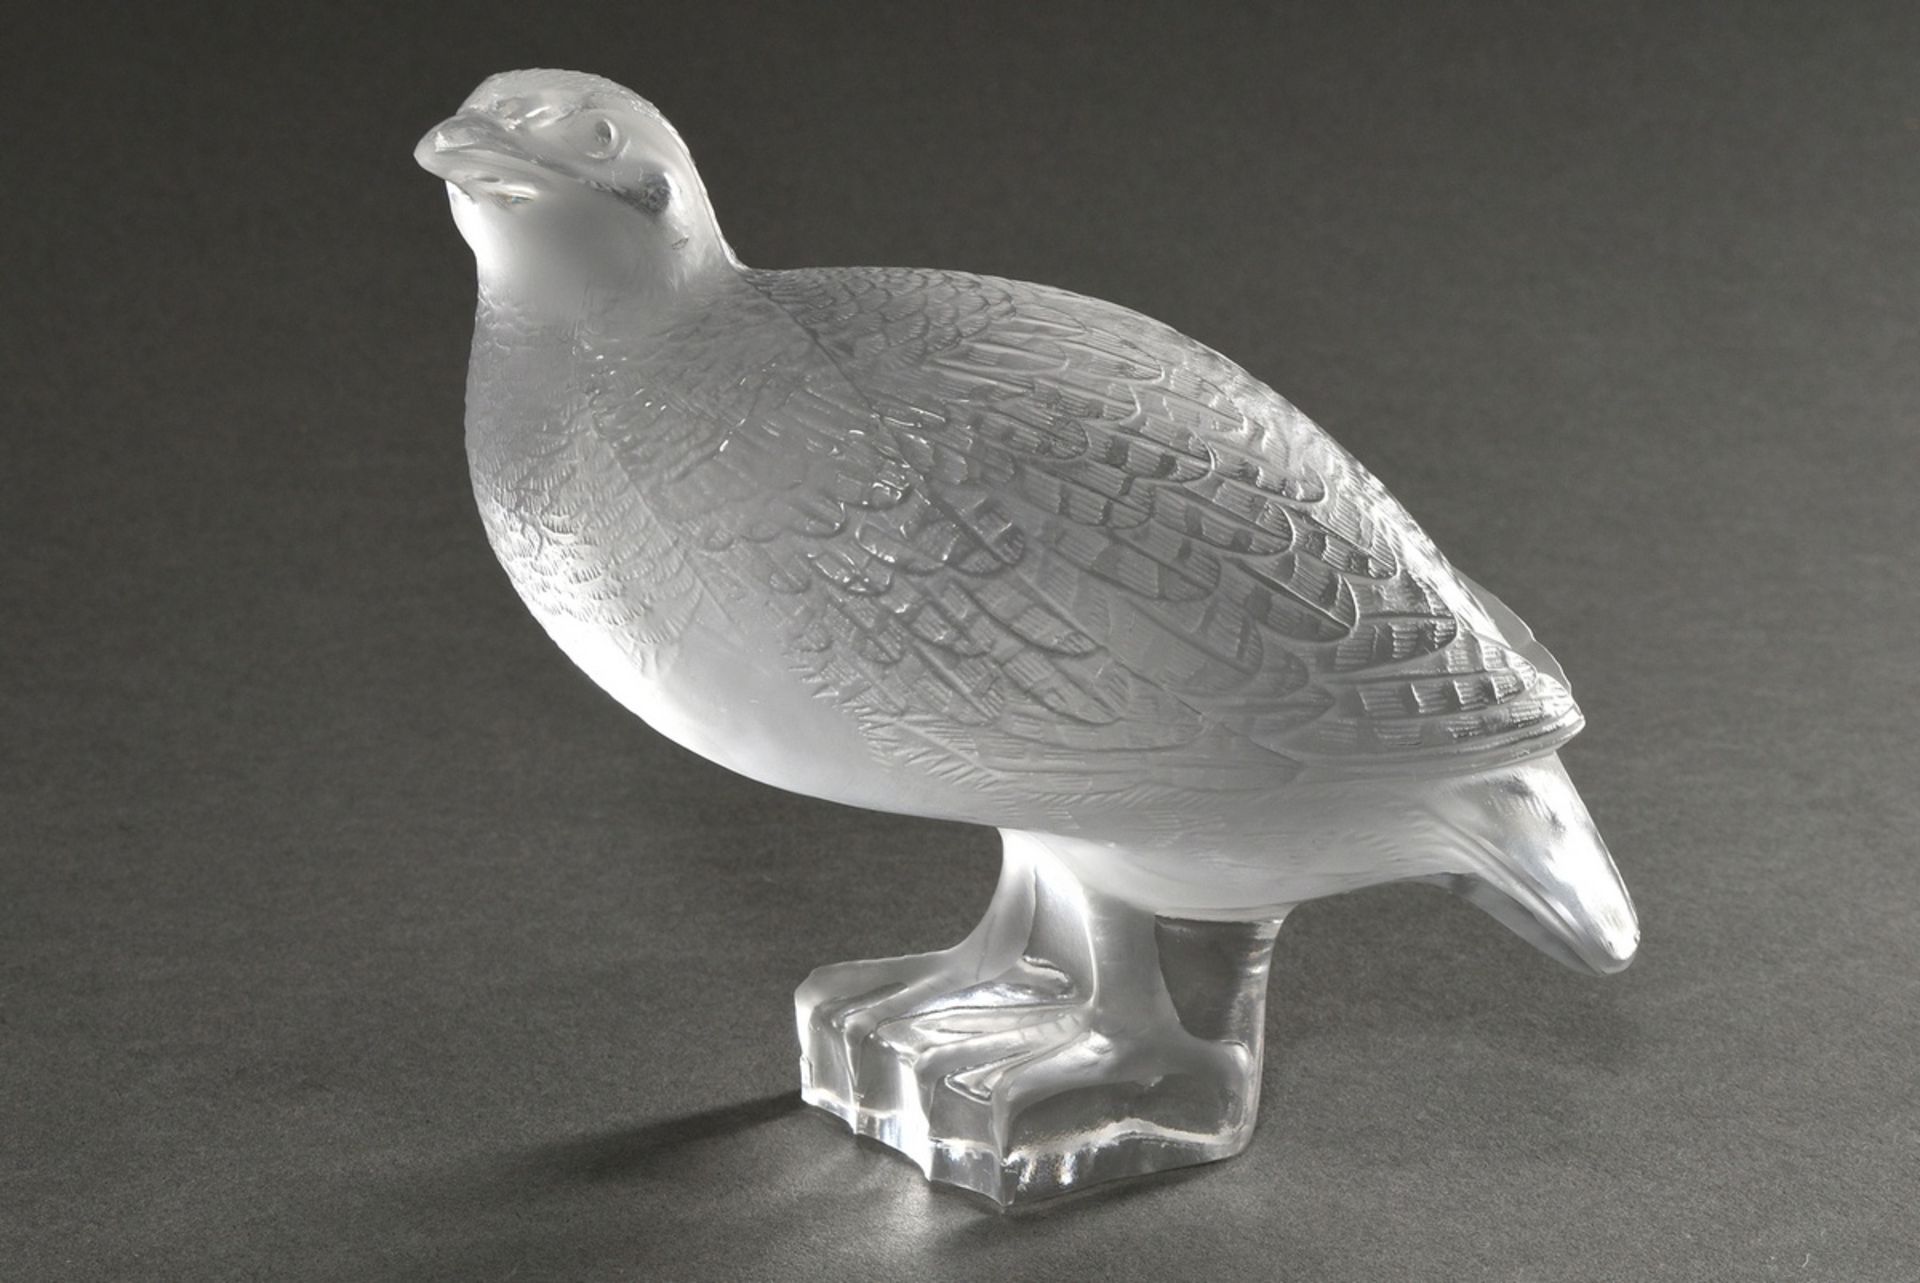 Lalique Figur "Rebhuhn" (Perdix debout), farblose Pressglas partiell satiniert in naturalistischer 